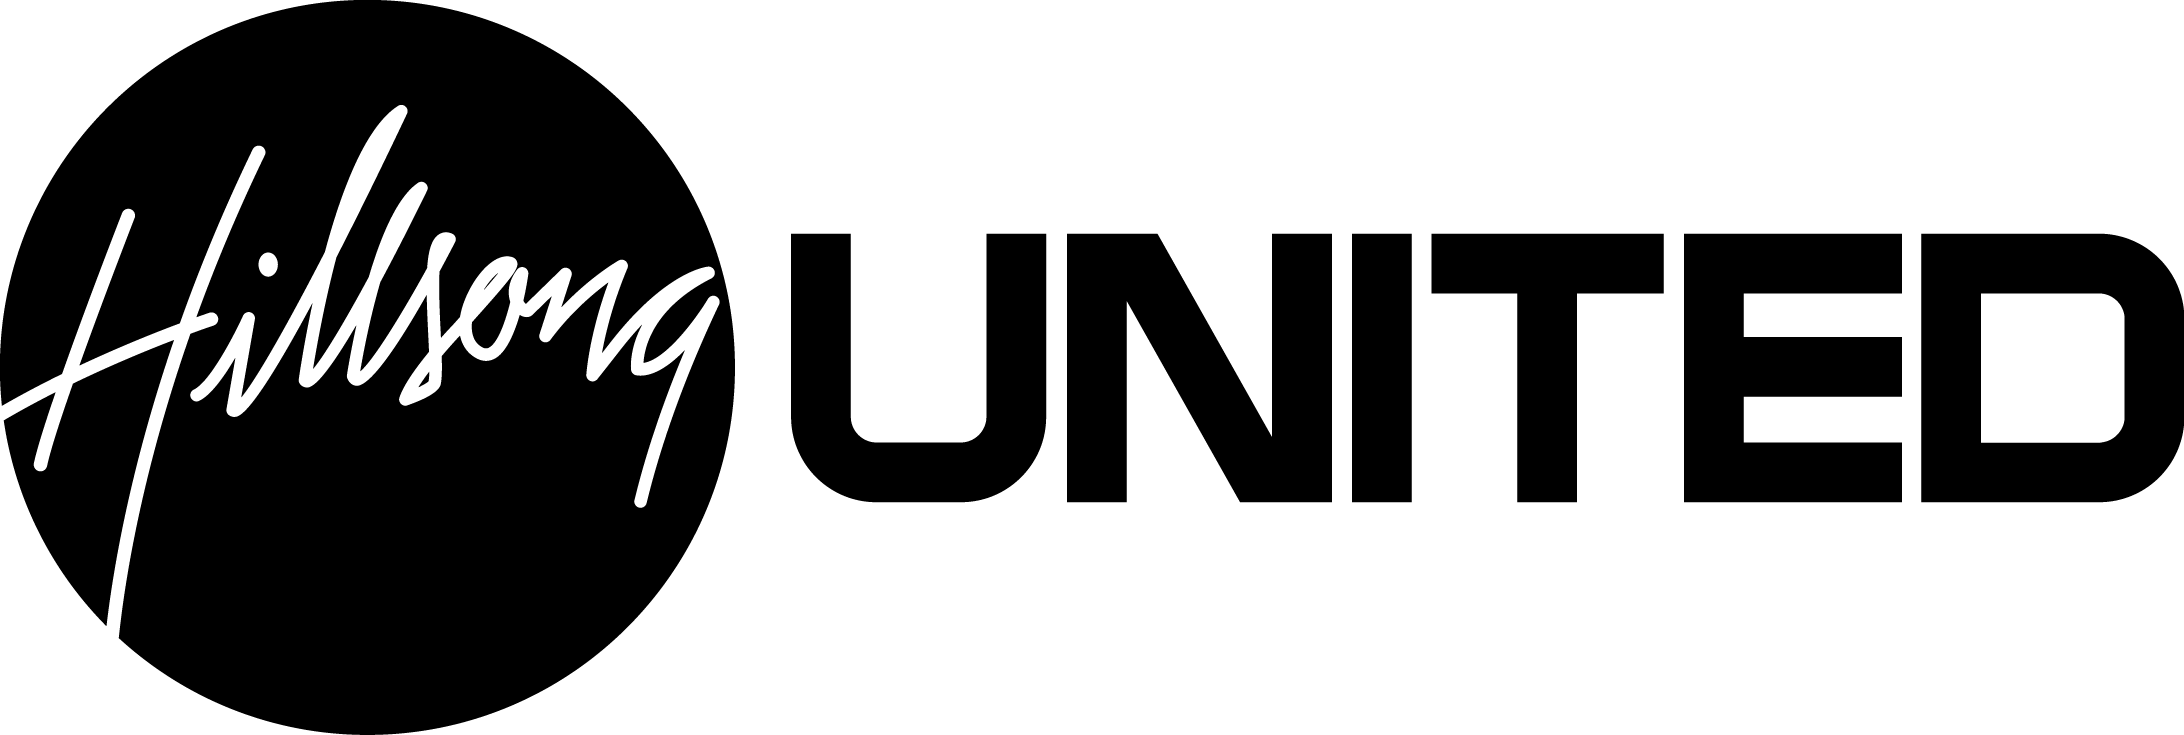 Hillsong United Logo.png